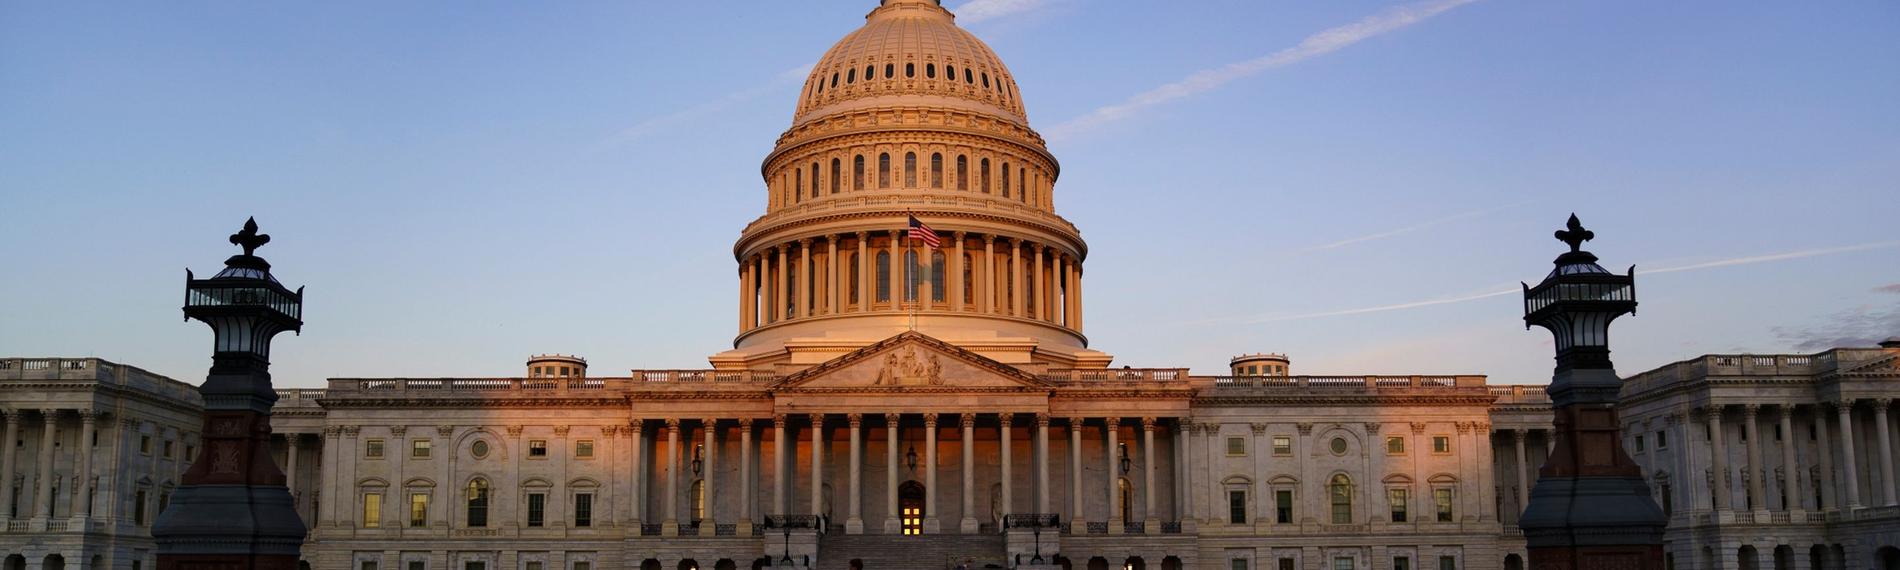 Das US-Kapitol in Washington. Archivbild